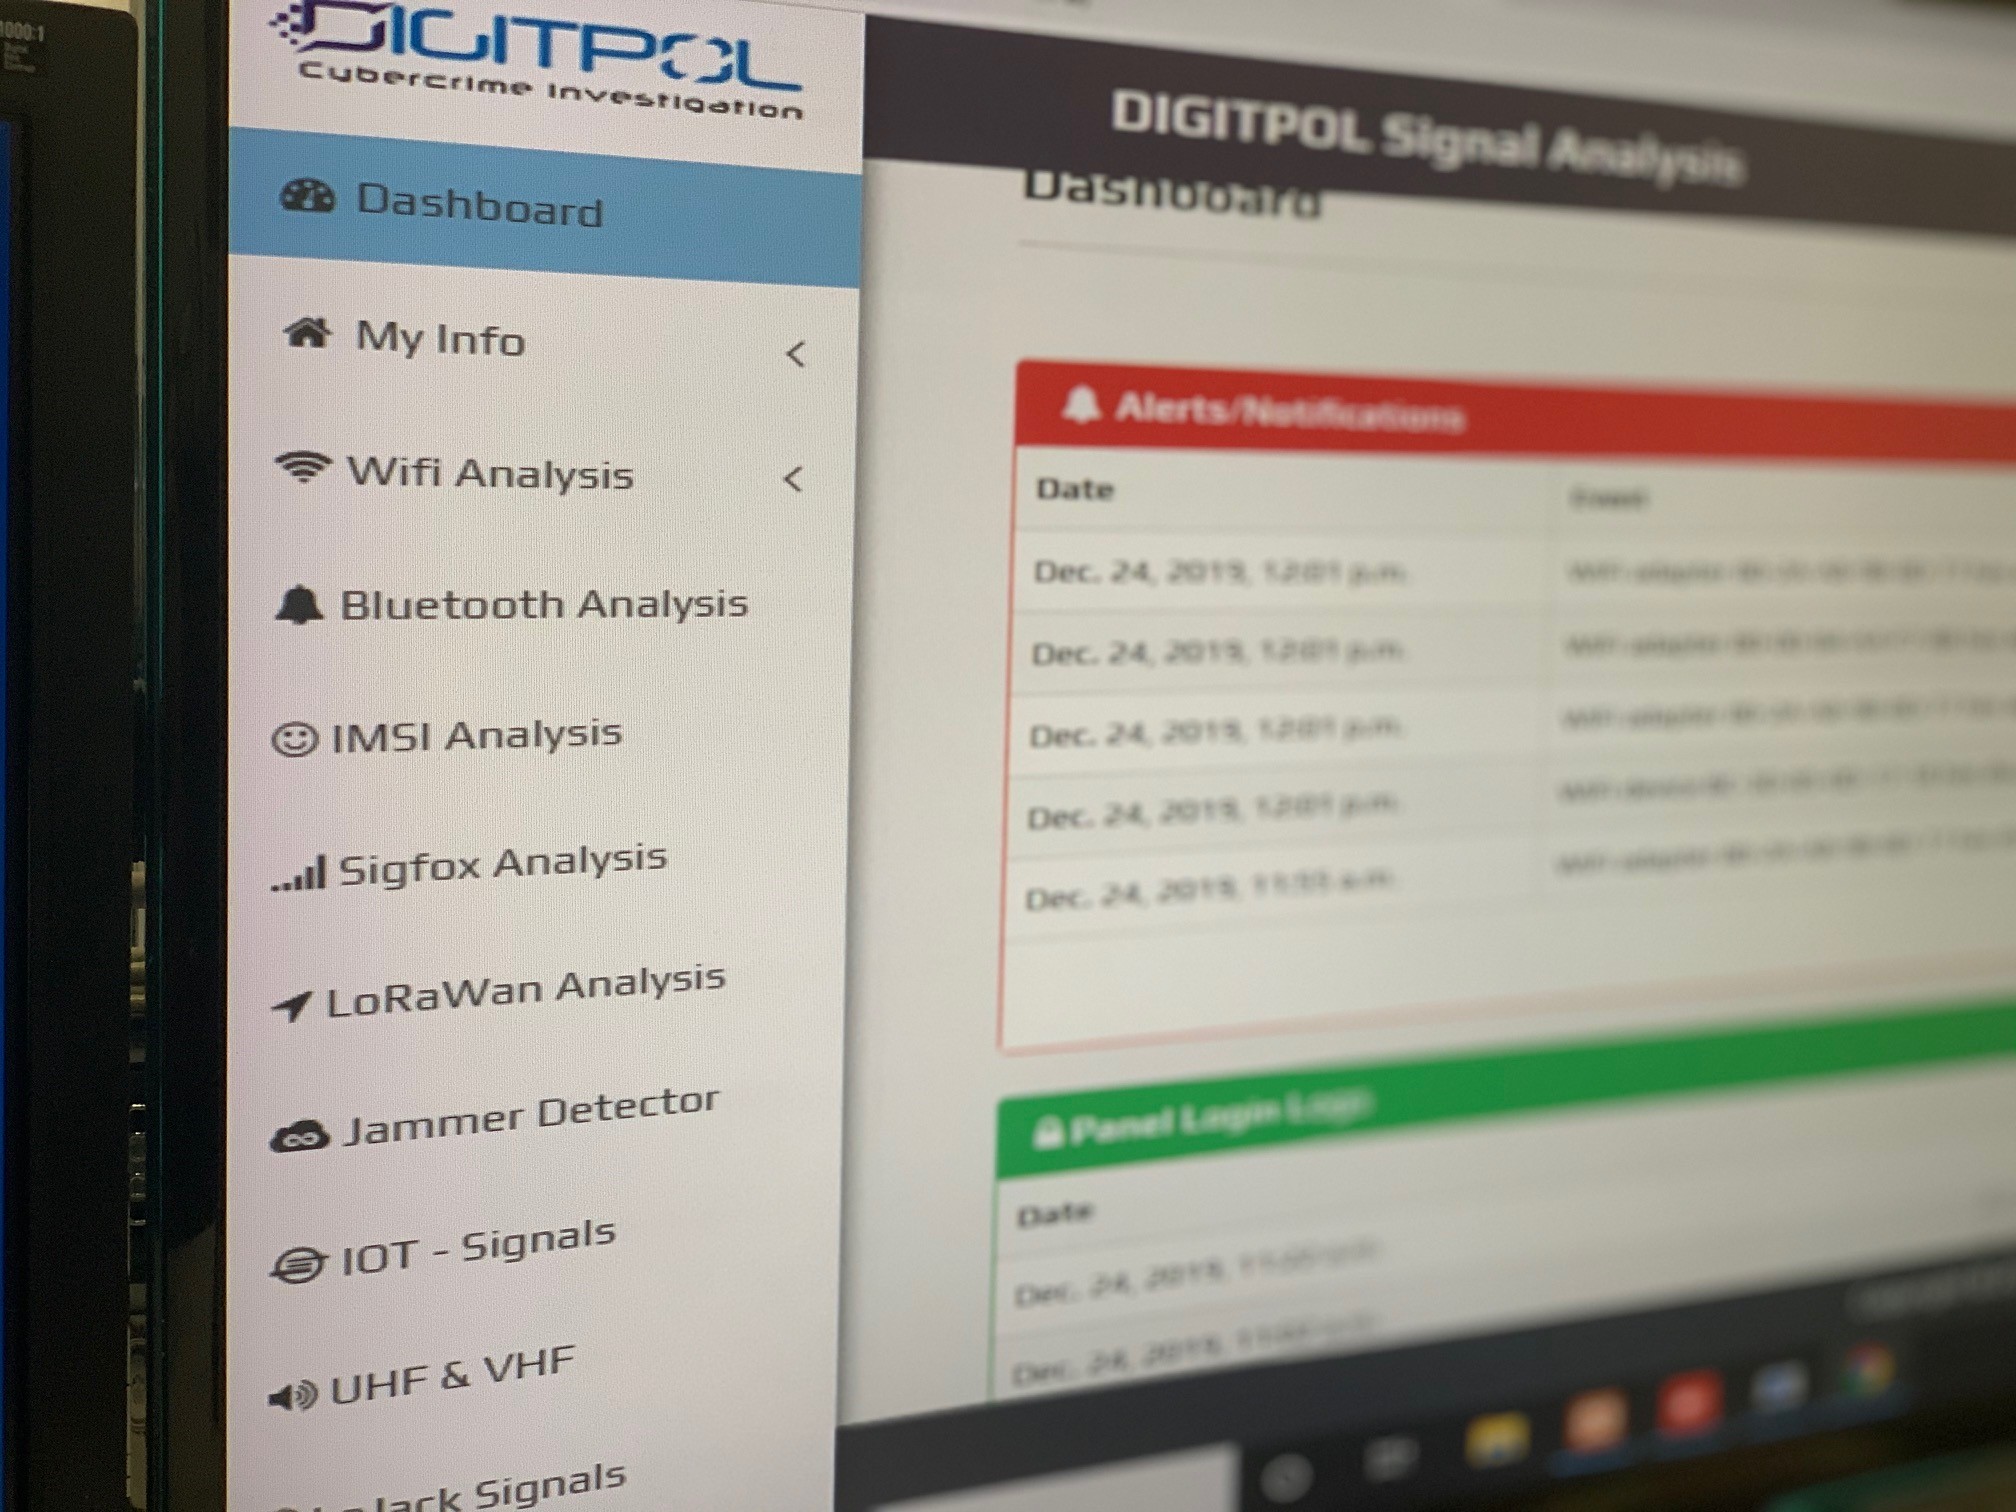 Digitpol ICT - Copy